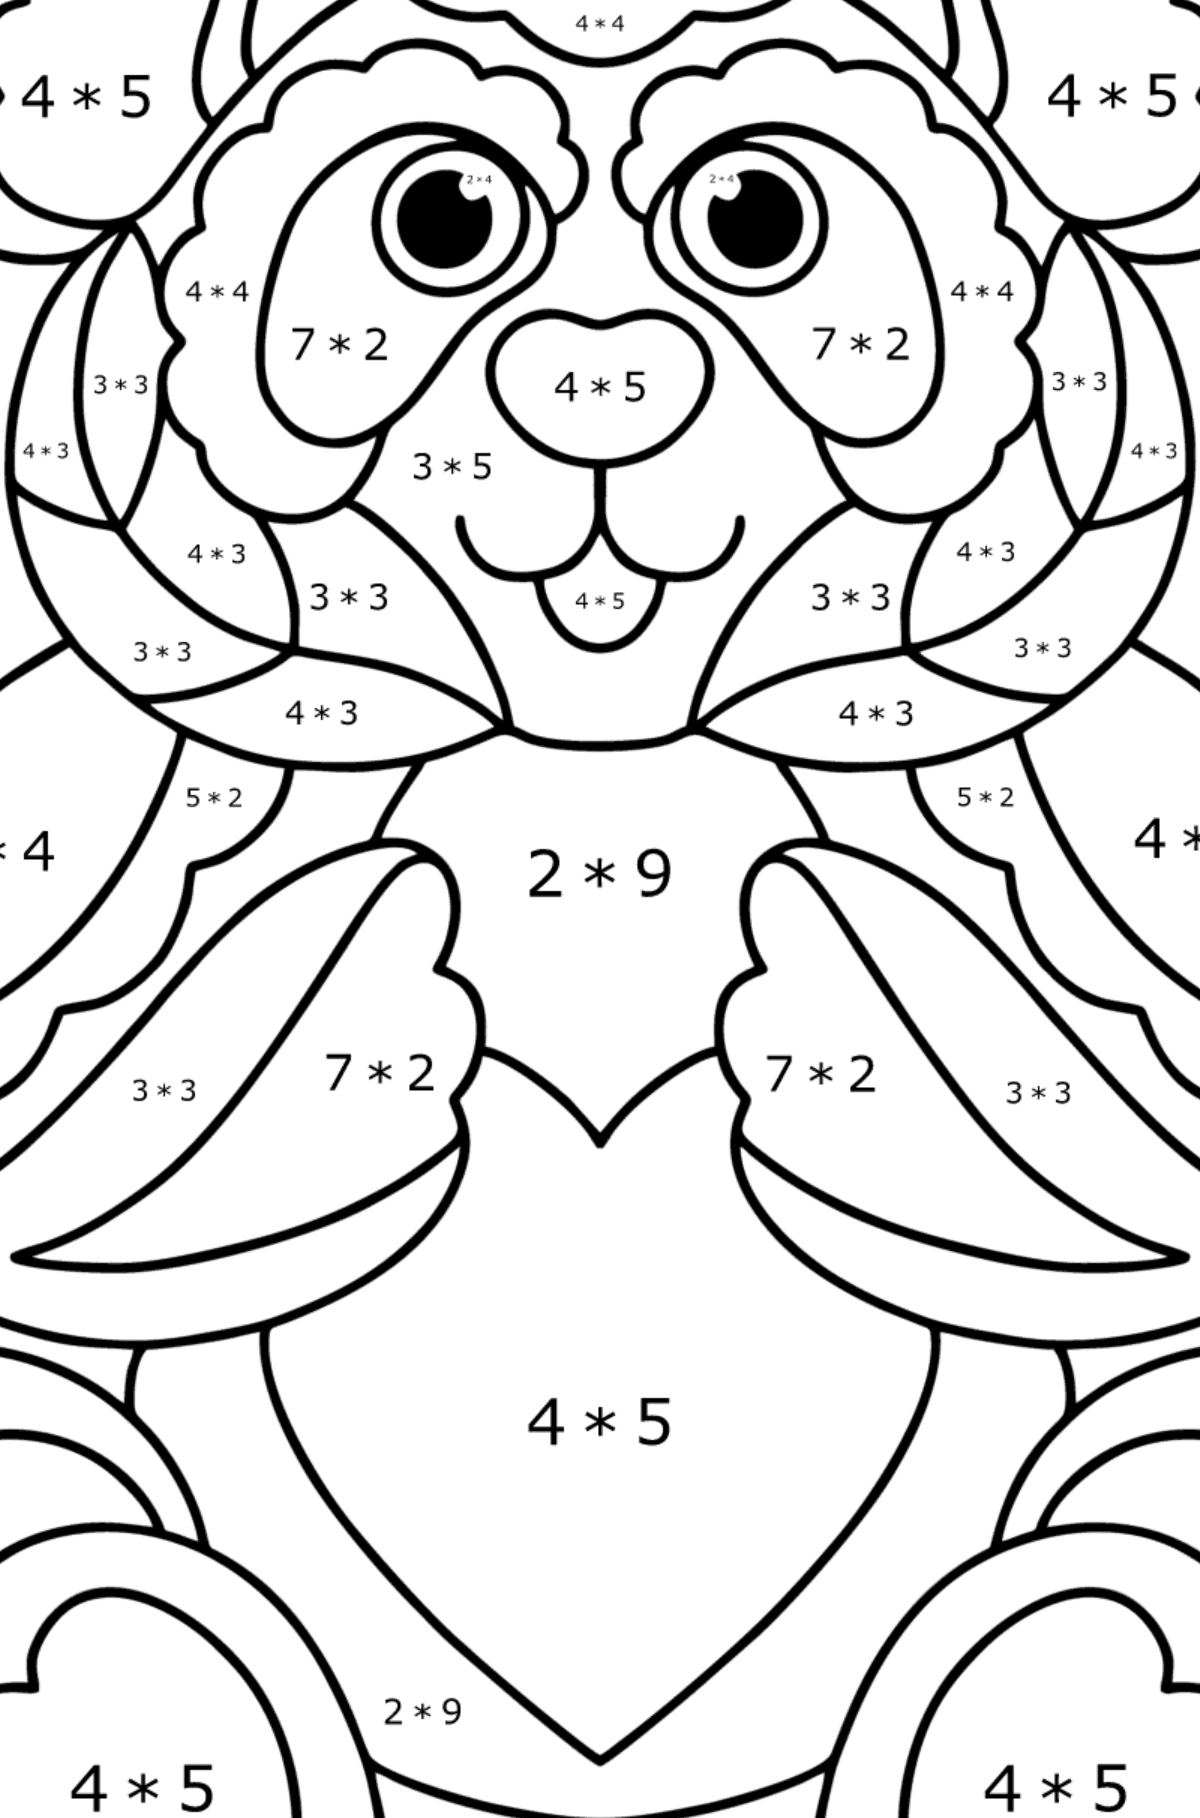 Panda antistress coloring page - Math Coloring - Multiplication for Kids